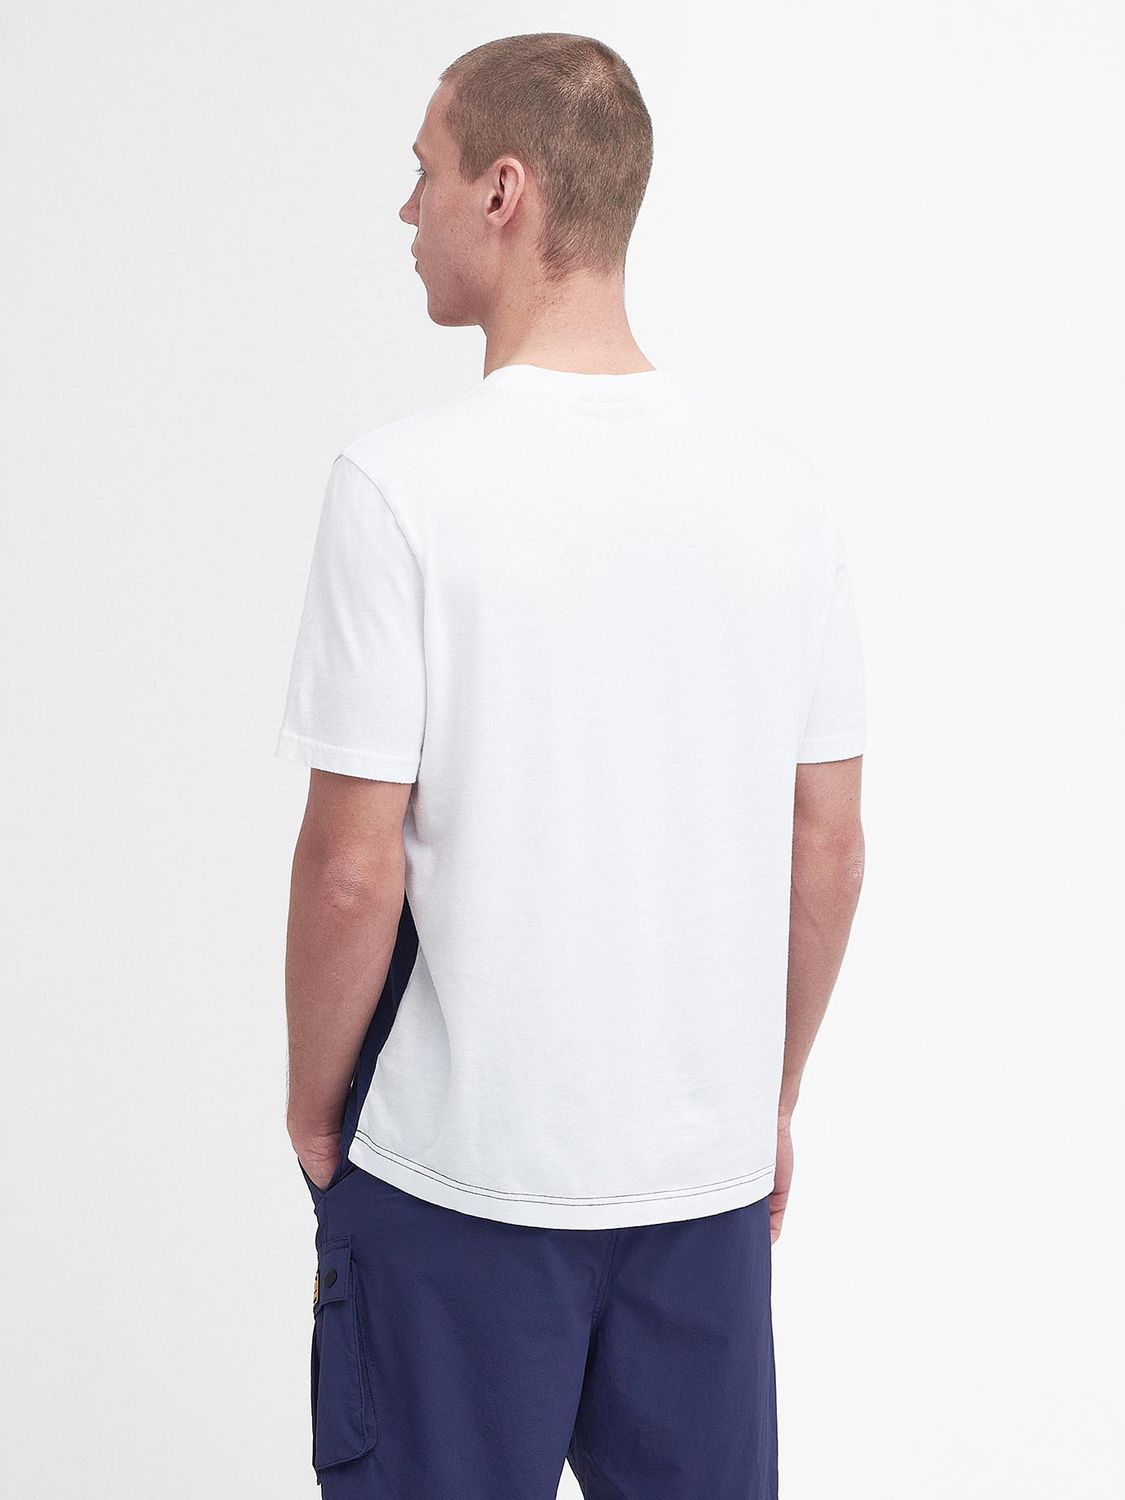 Barbour International Mondrian Colour T-Shirt, White/Blue, S